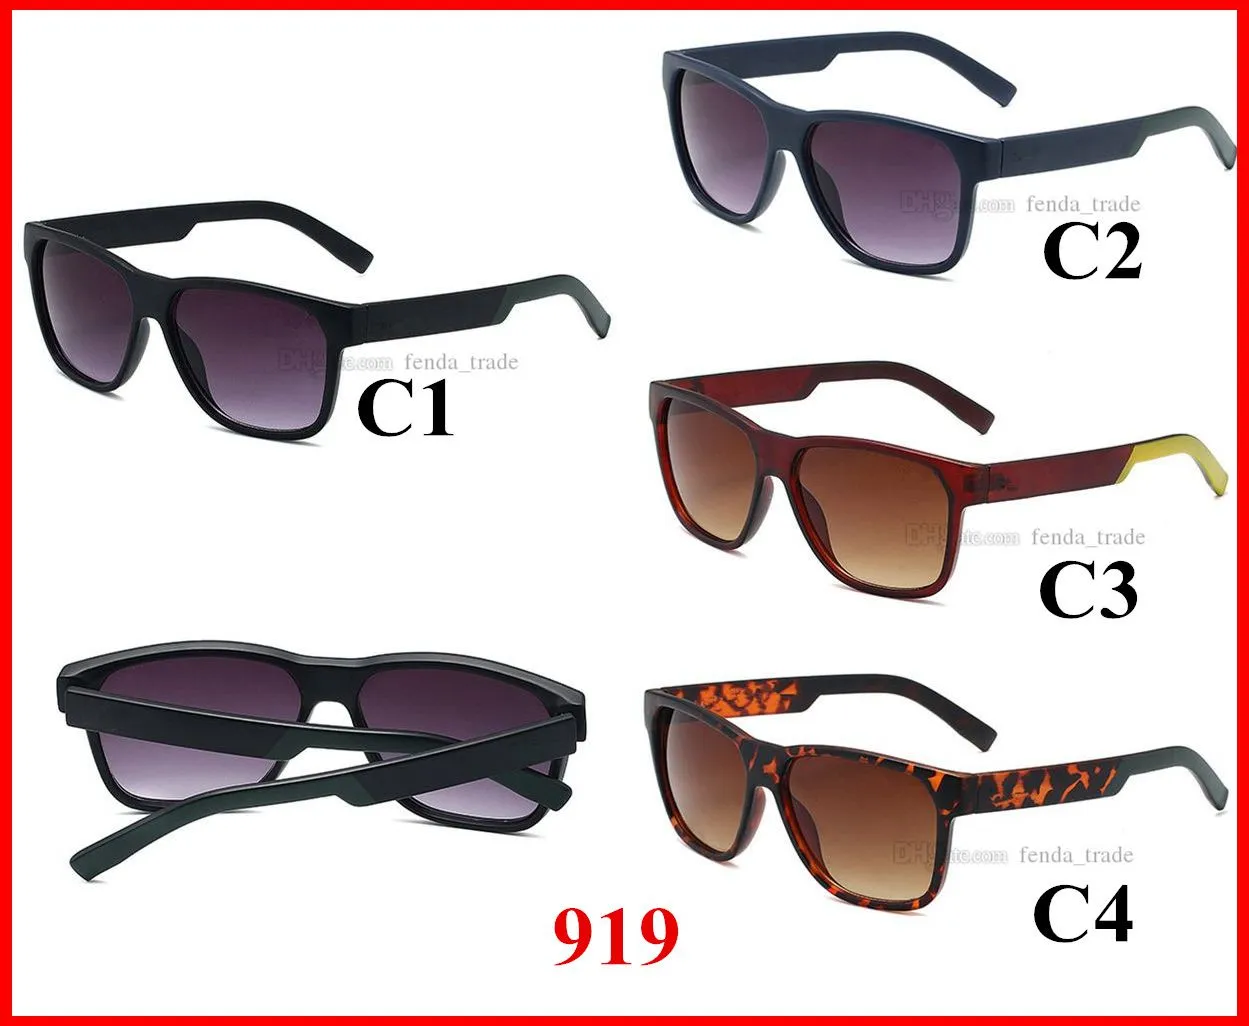 Sommerstrand Billiger 2020 Neue Heiße Sonnenbrille Retro Form Marke Design Große Rahmentöne Frauen UV400 Eyewear Männer Sport Fahrer Sonnenbrille